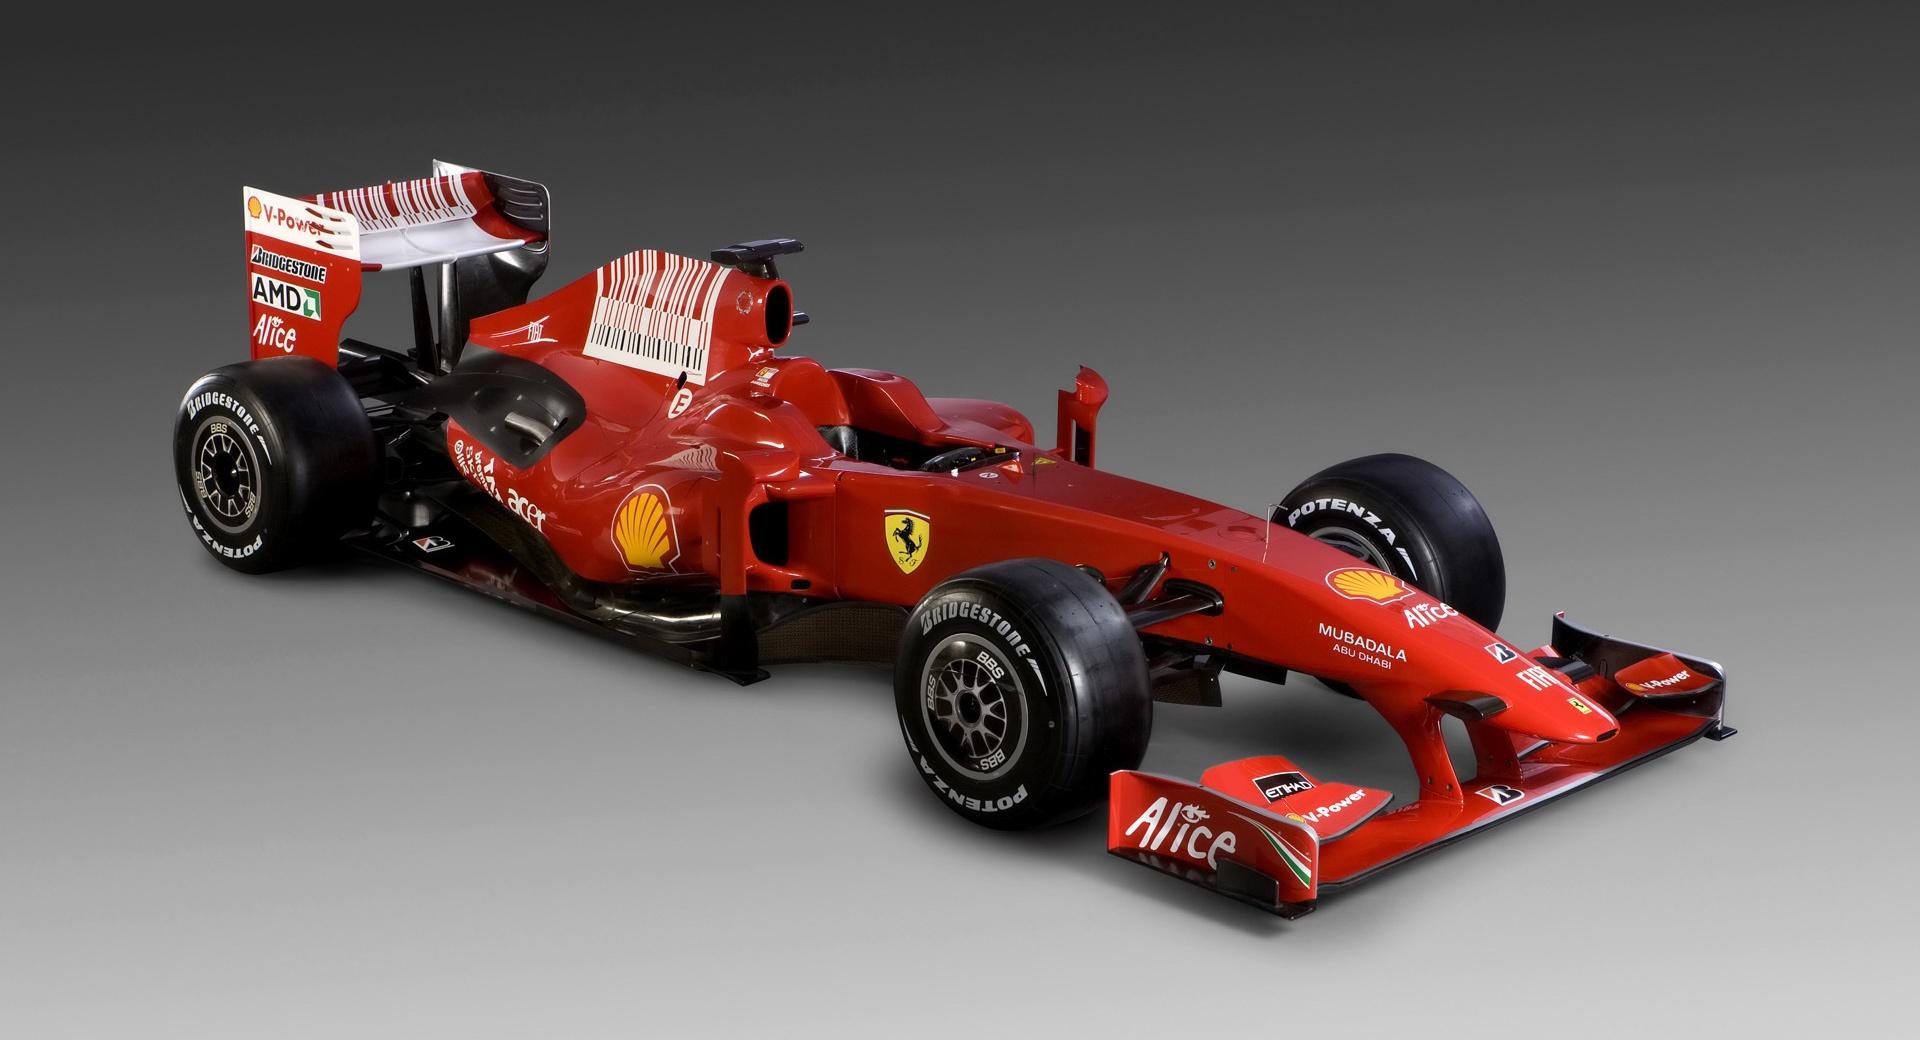 Formula 1 Ferrari Car at 1280 x 960 size wallpapers HD quality